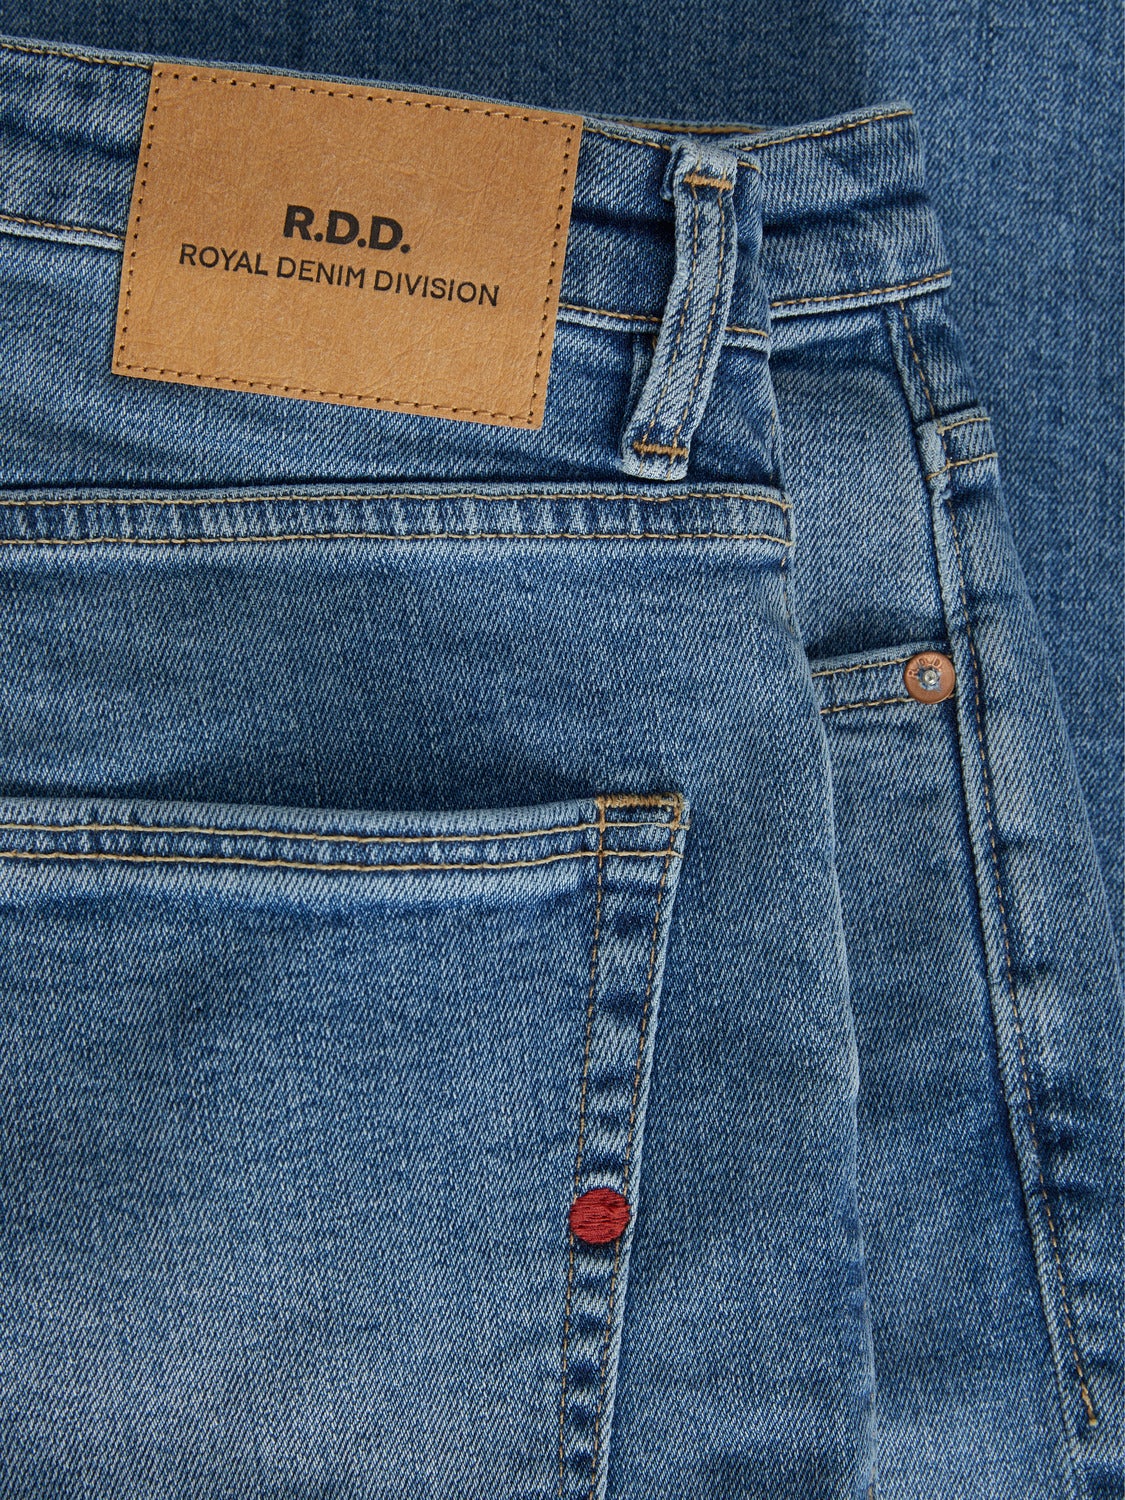 Jack & jones Chris Royal Selvedge Ri 324 Loose Fit Jeans Blue| Dressinn